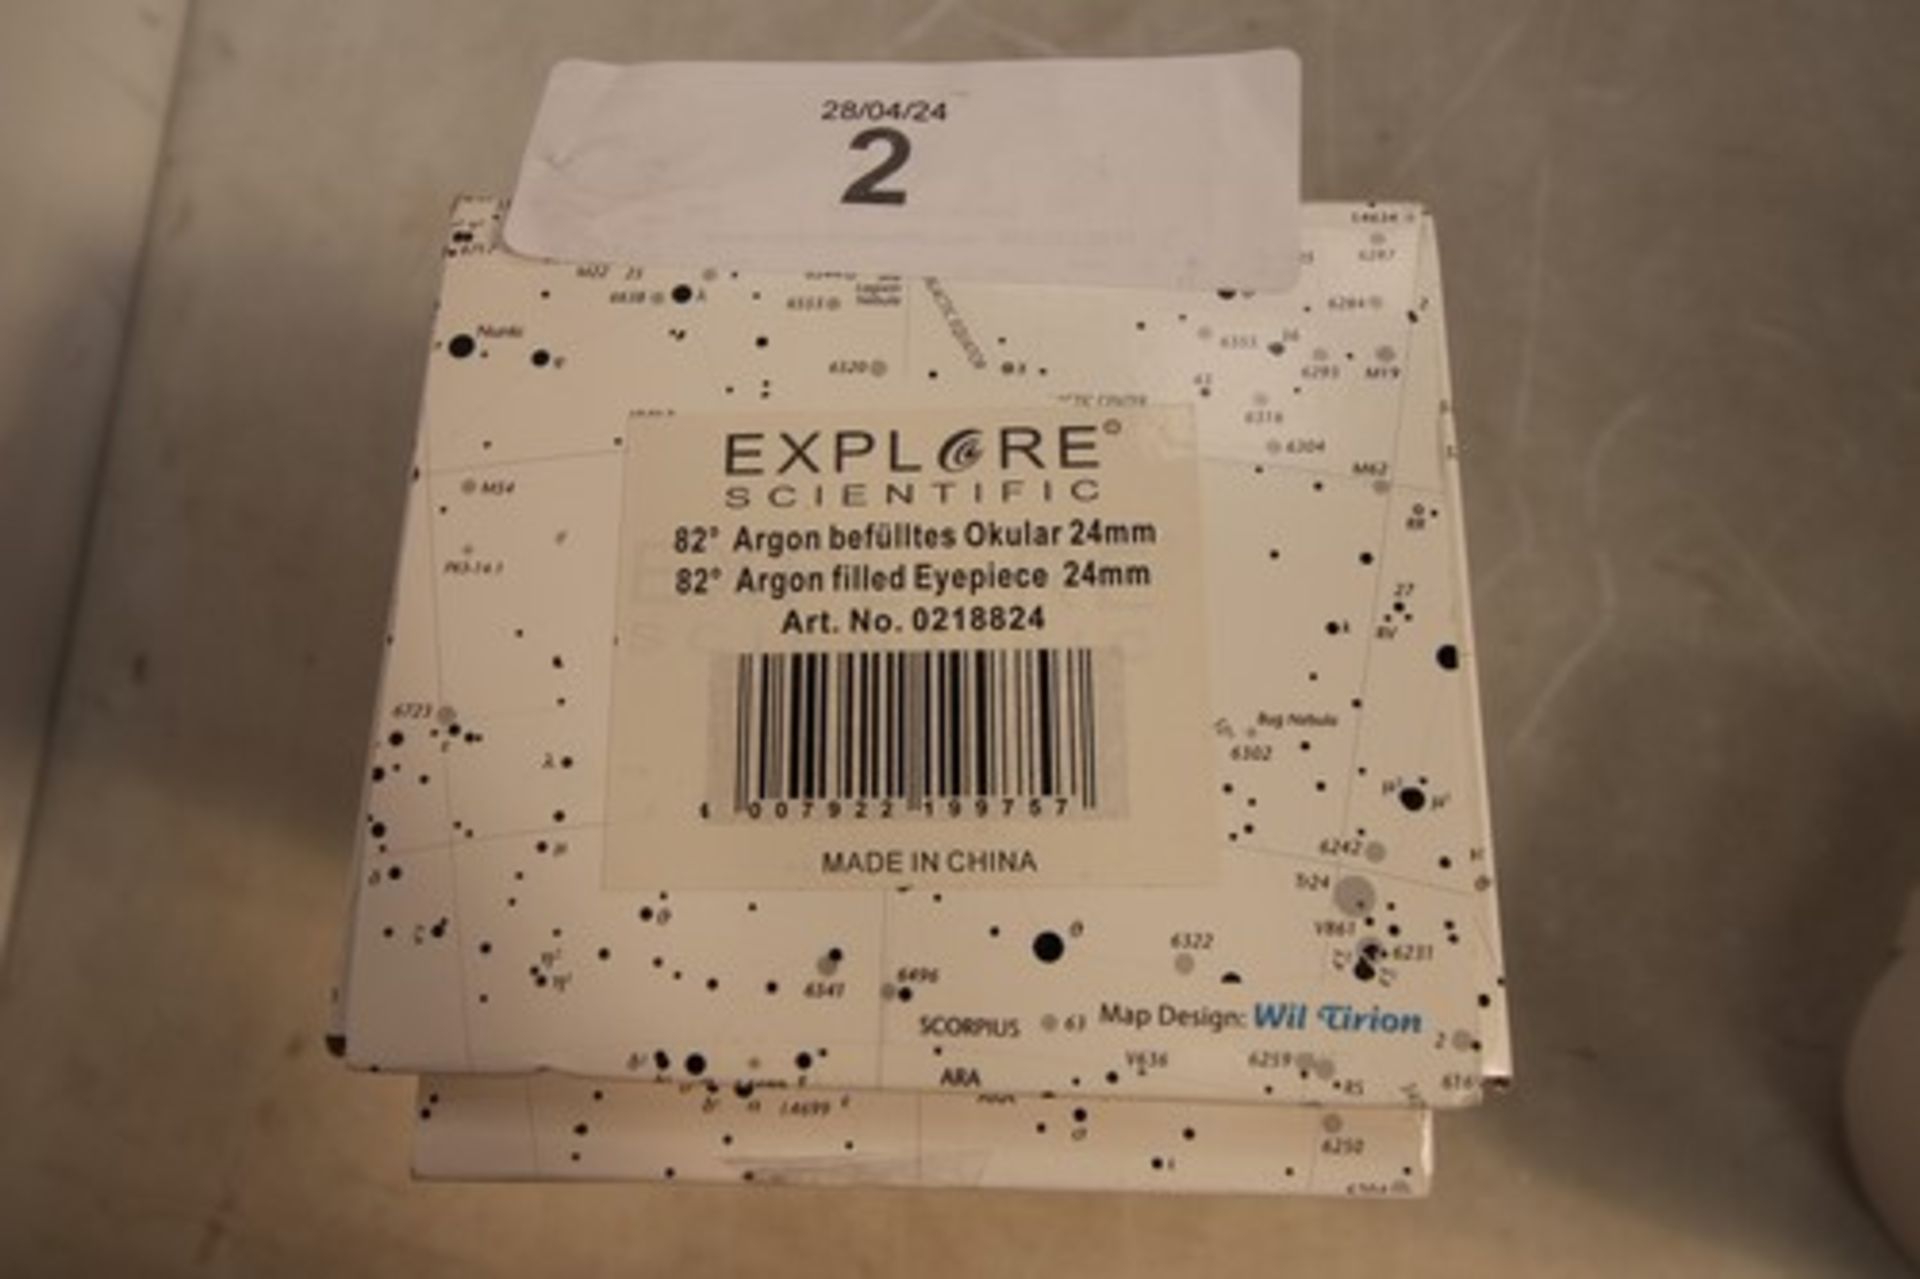 1 x Explore Scientific 82 degree 24mm eyepiece, EAN 007922199757 - new in box (C8) - Image 2 of 2